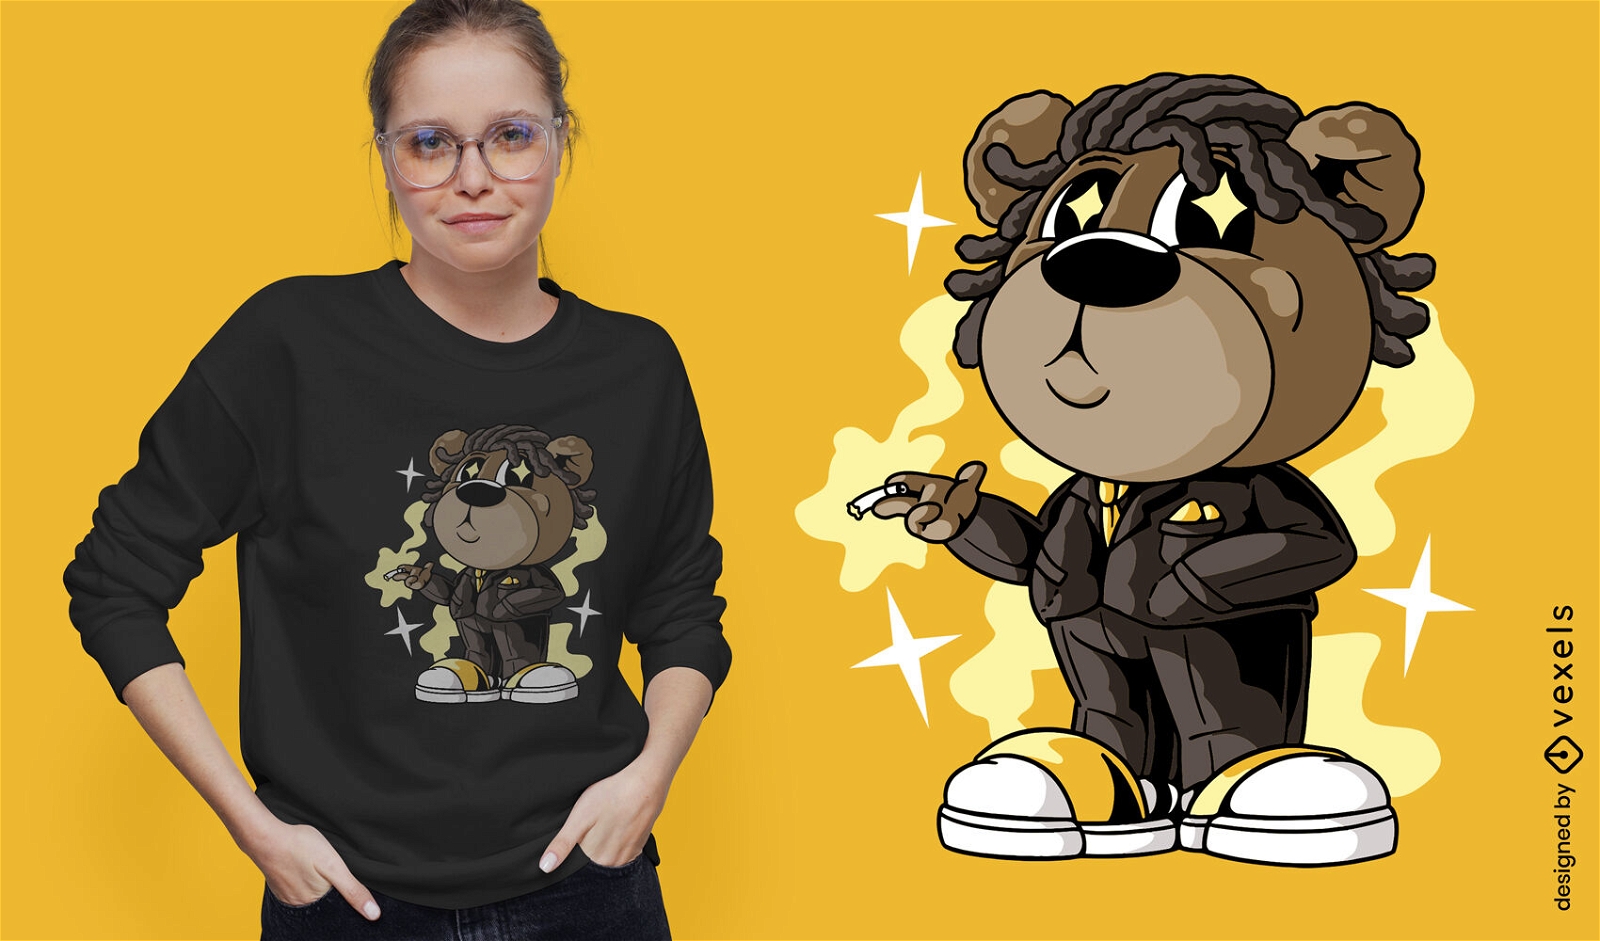 Business-Anzug-Teddybär-T-Shirt-Design